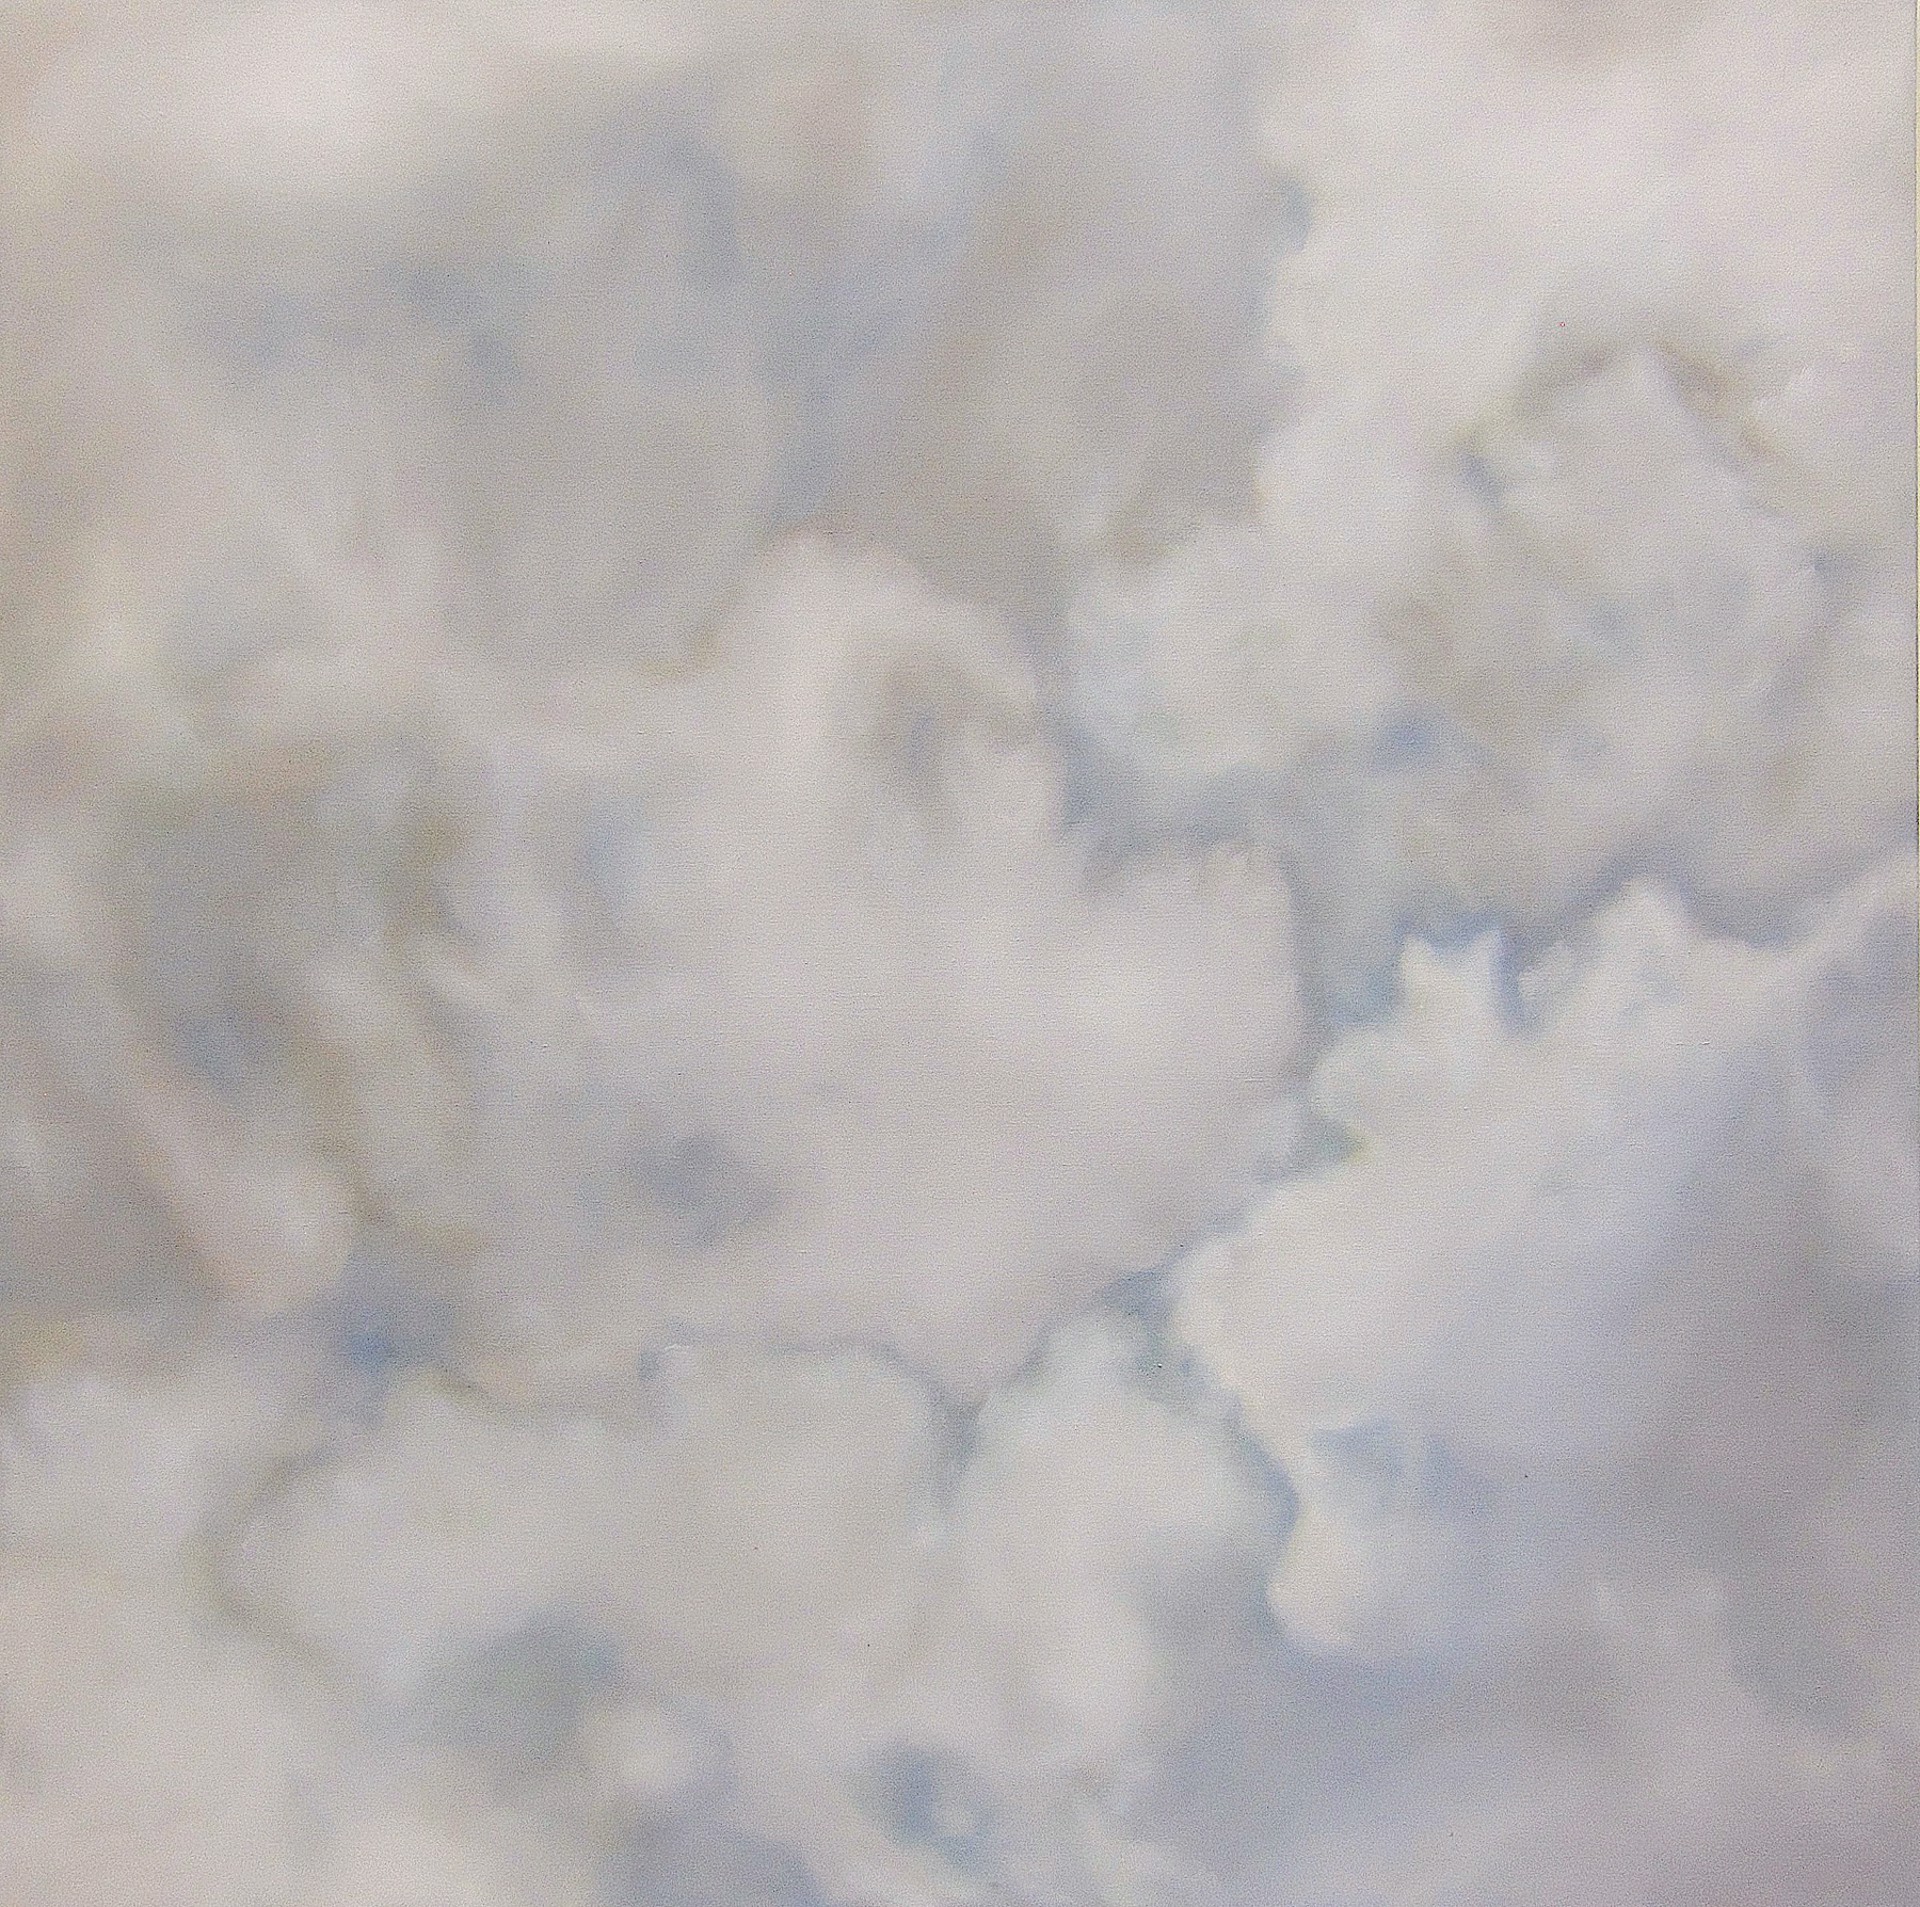 Ciel Insensible (Sensitive Skies) by Frederic Choisel